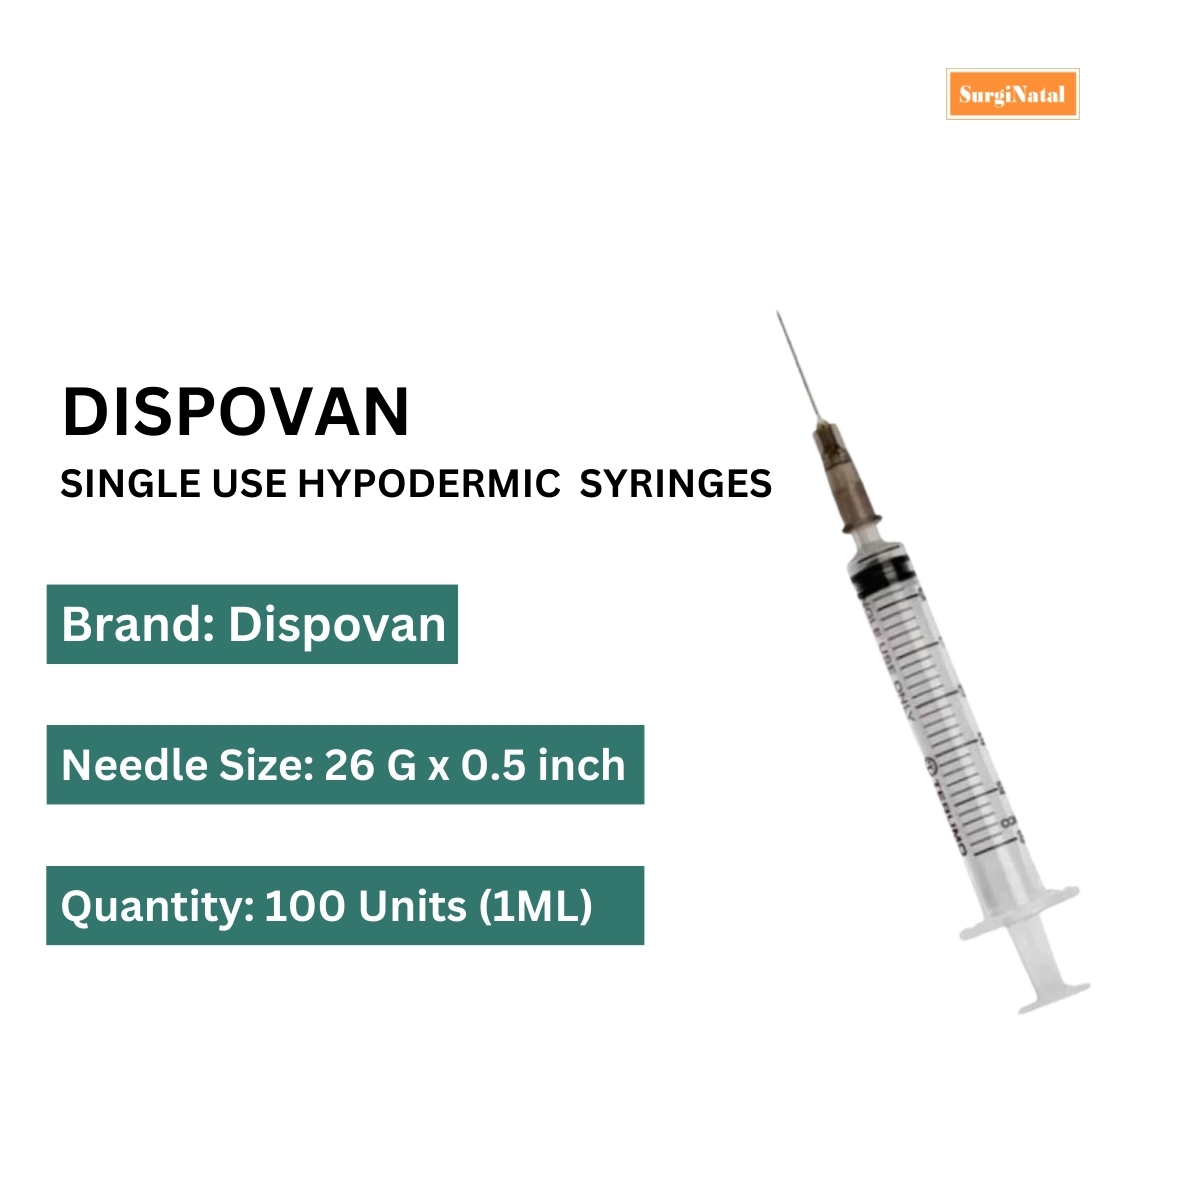 dispo van 1ml syringe with needle - 26g - 100 units pack